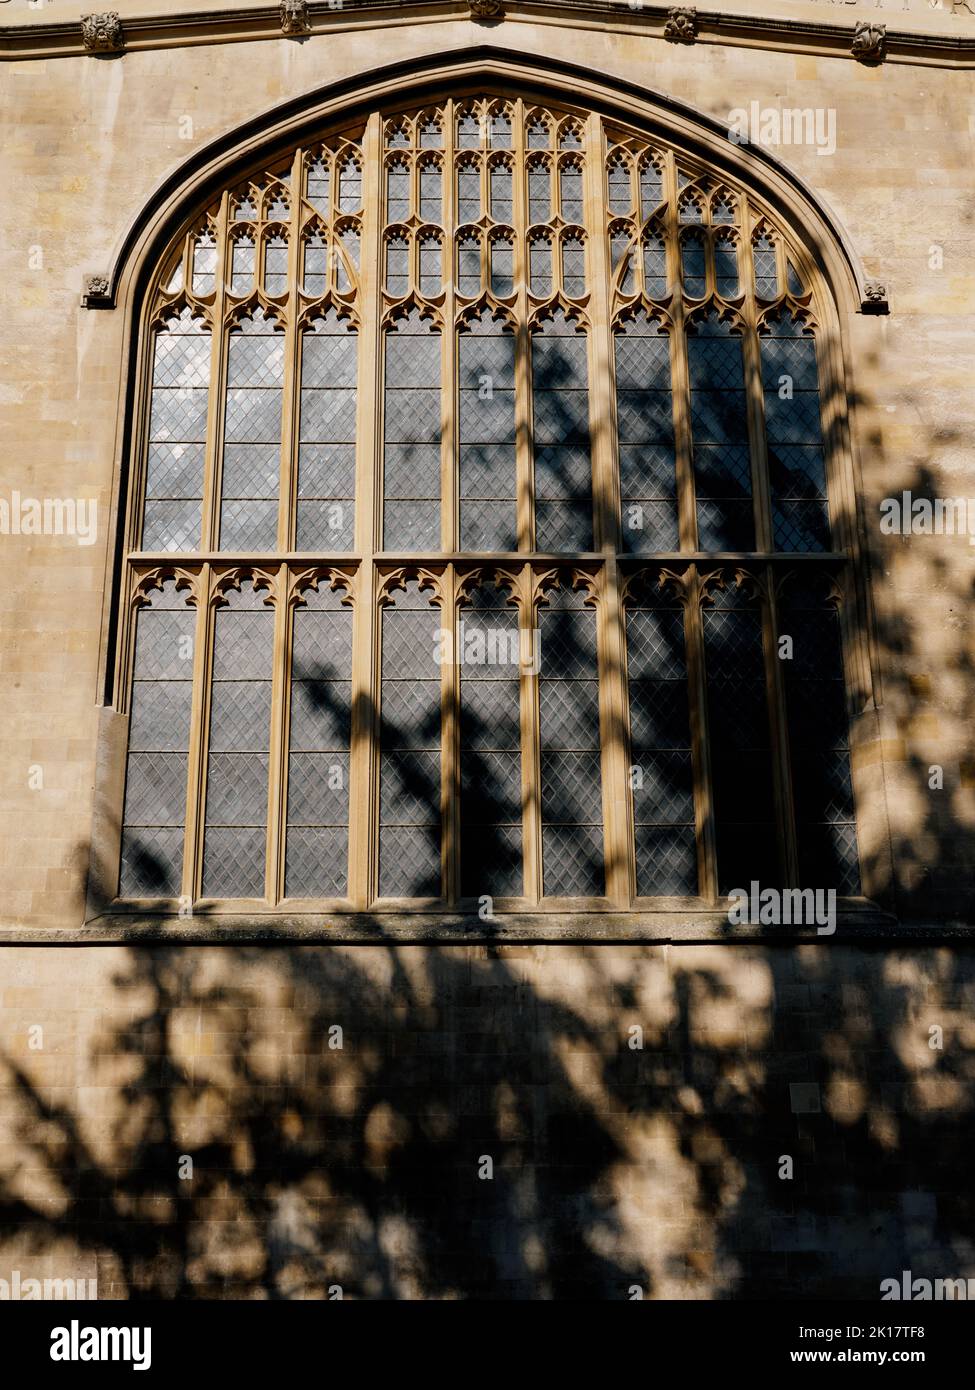 Trinity College Chapel, Cambridge University in Cambridge Cambridgeshire England UK - architecture detail Stock Photo